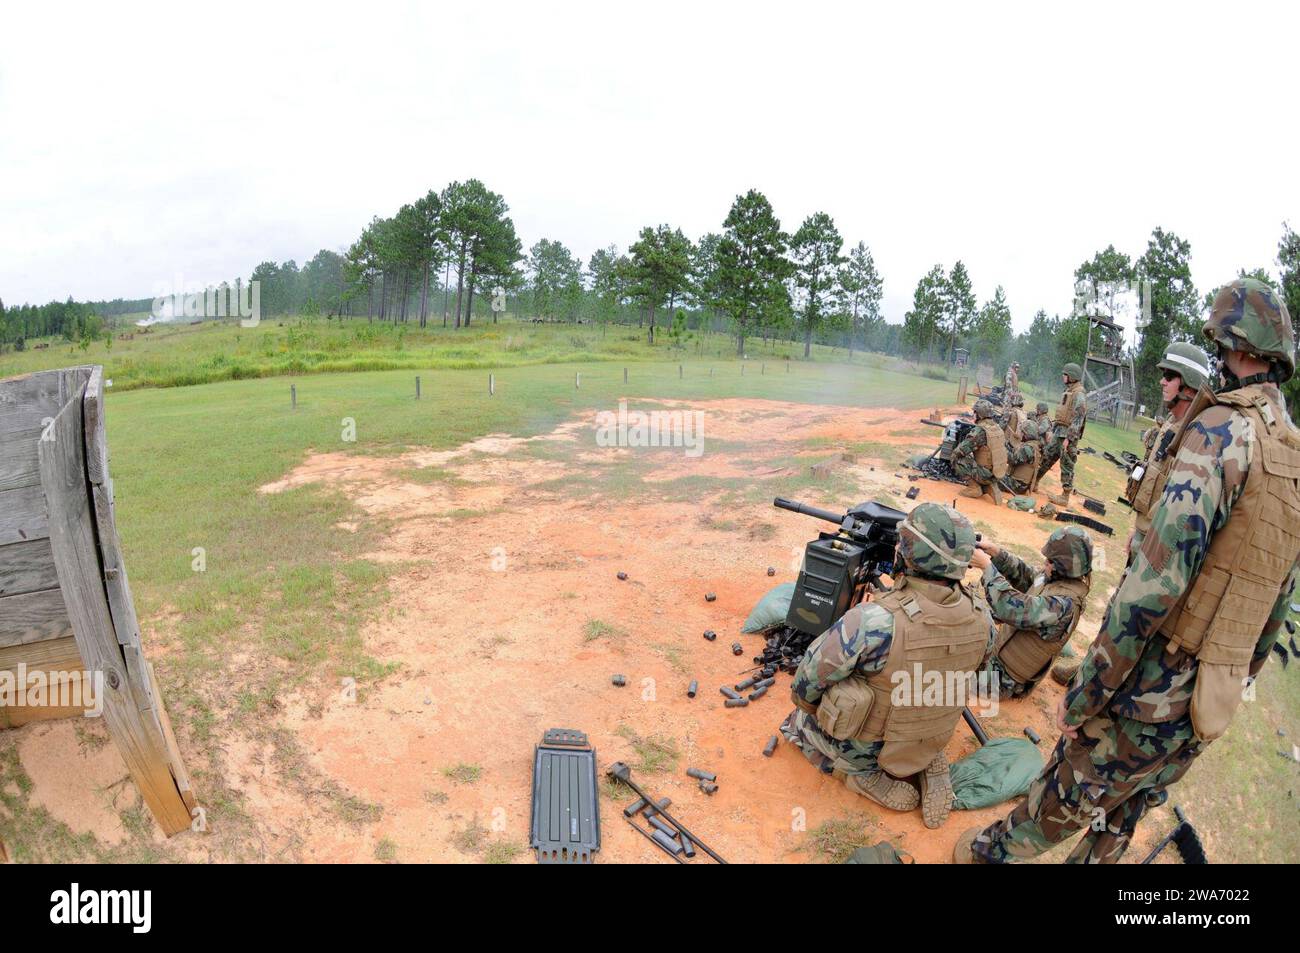 US military forces. 110902UH337-154 - NMCB 11 at MK19 firing range (Image 18 of 27). Stock Photo